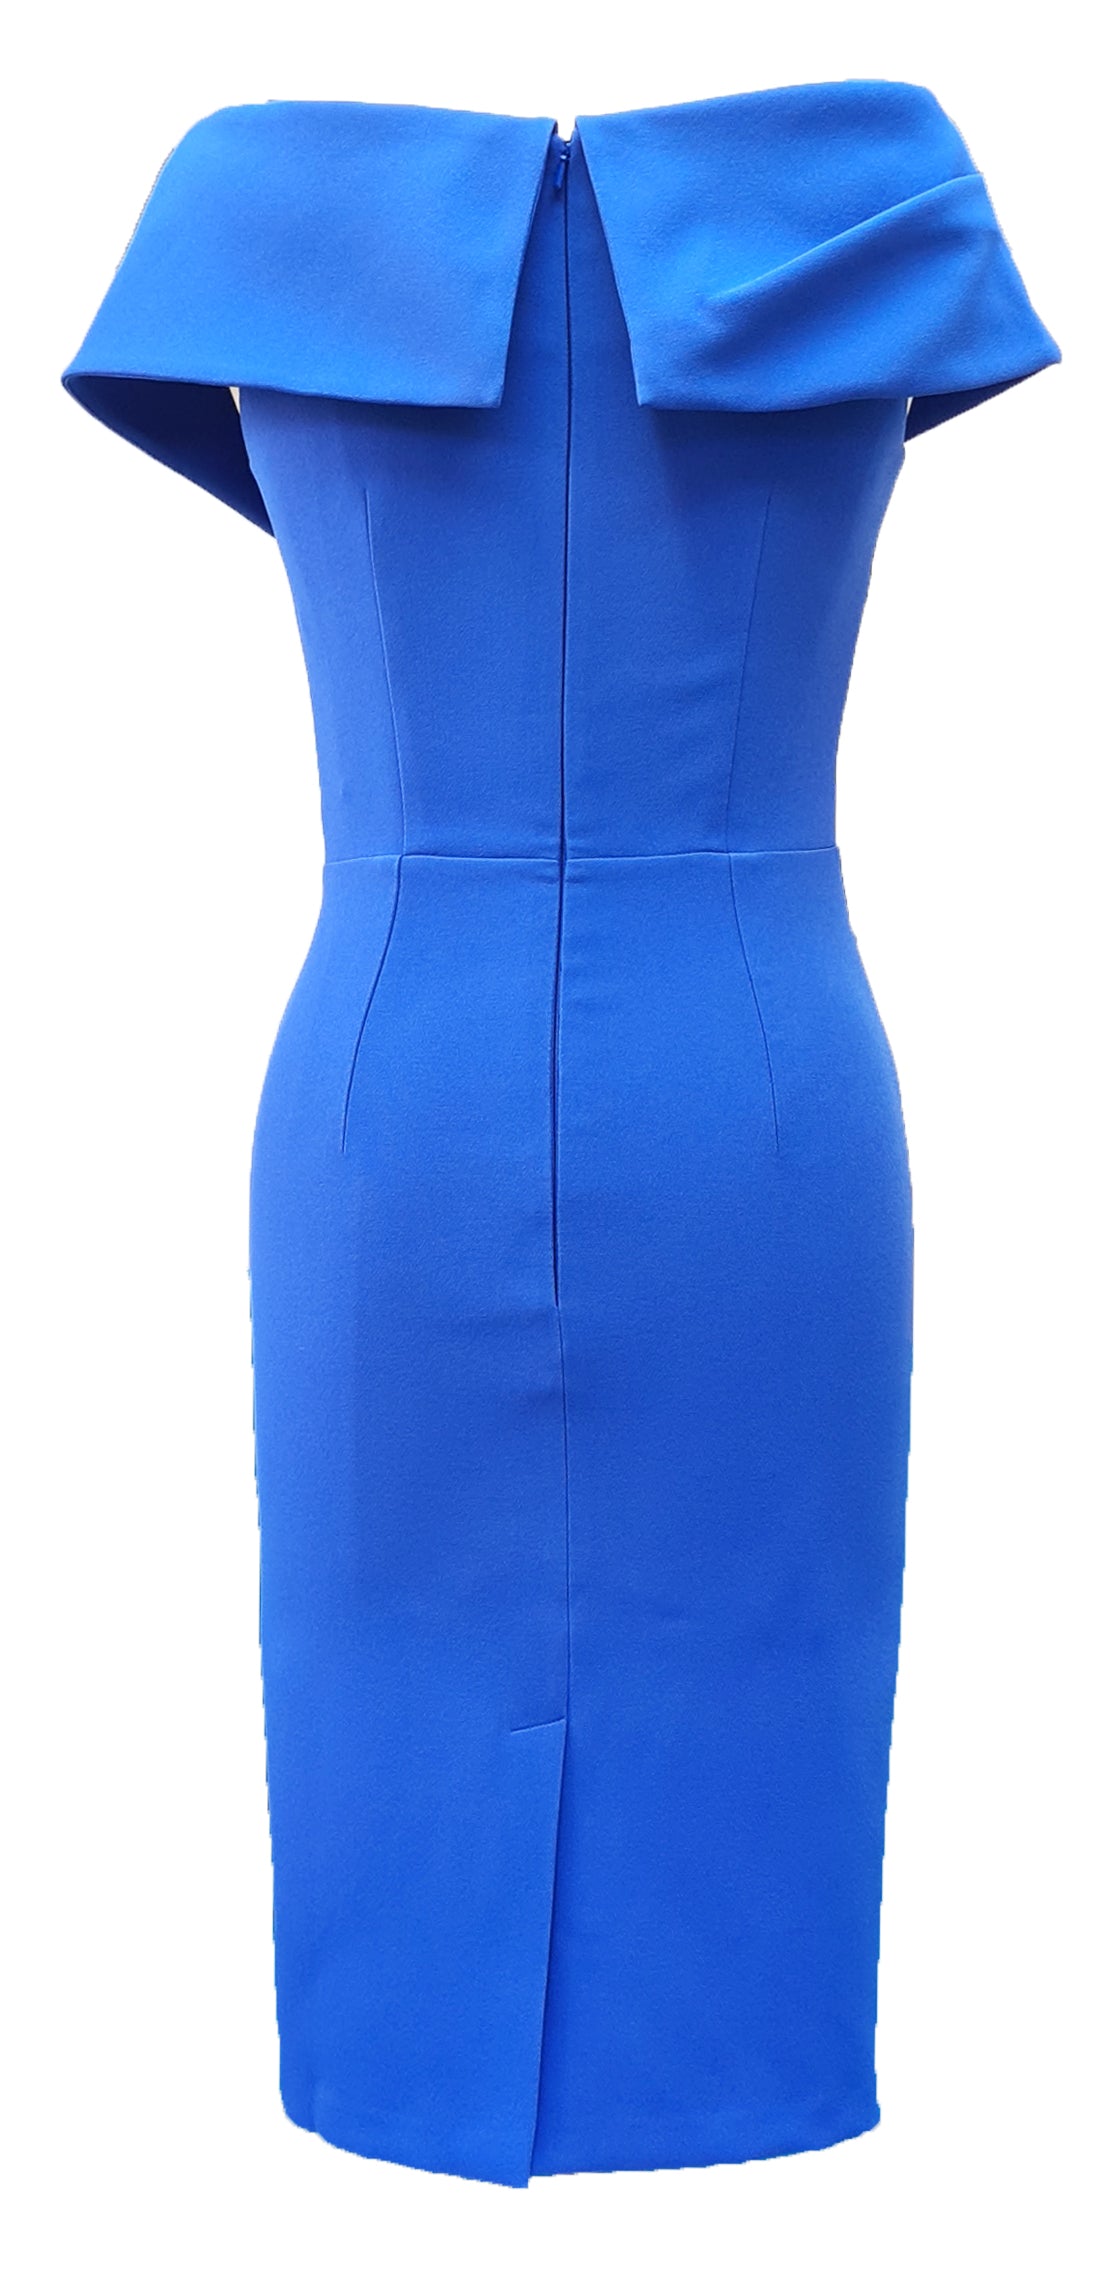 Olympia Dress DRC233 Cornflower Blue Crepe